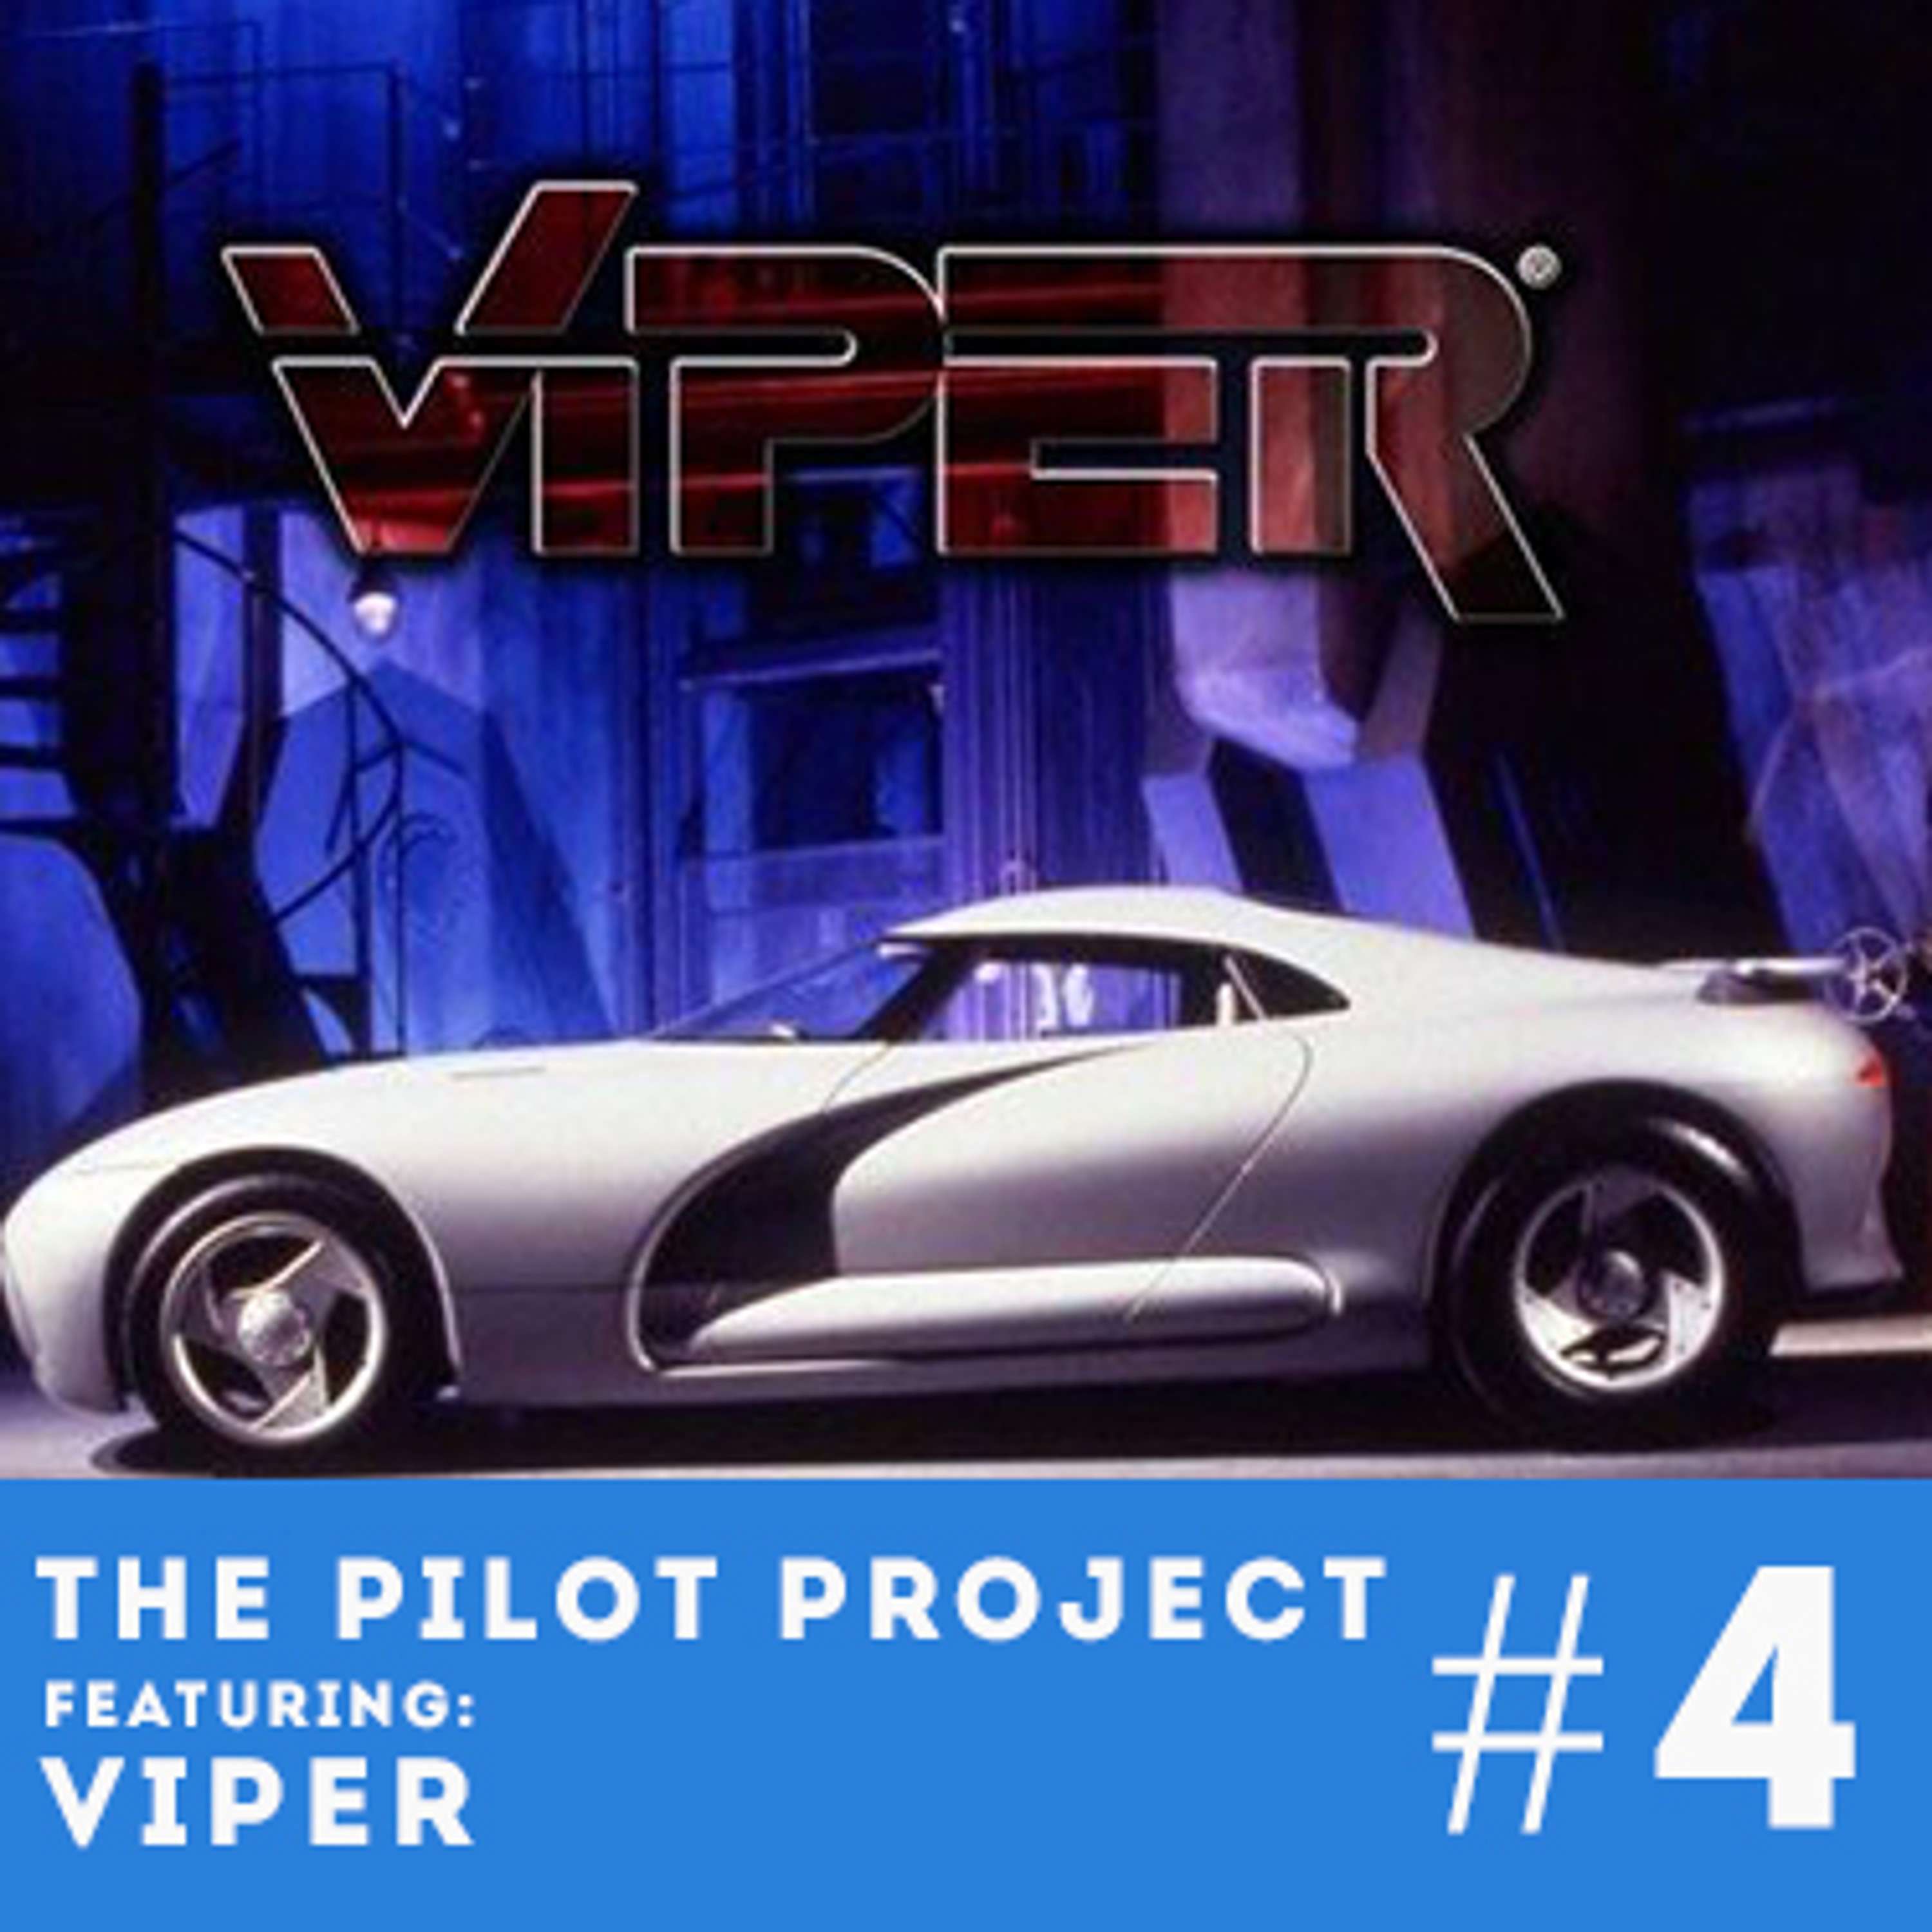 4 - Viper (1994)